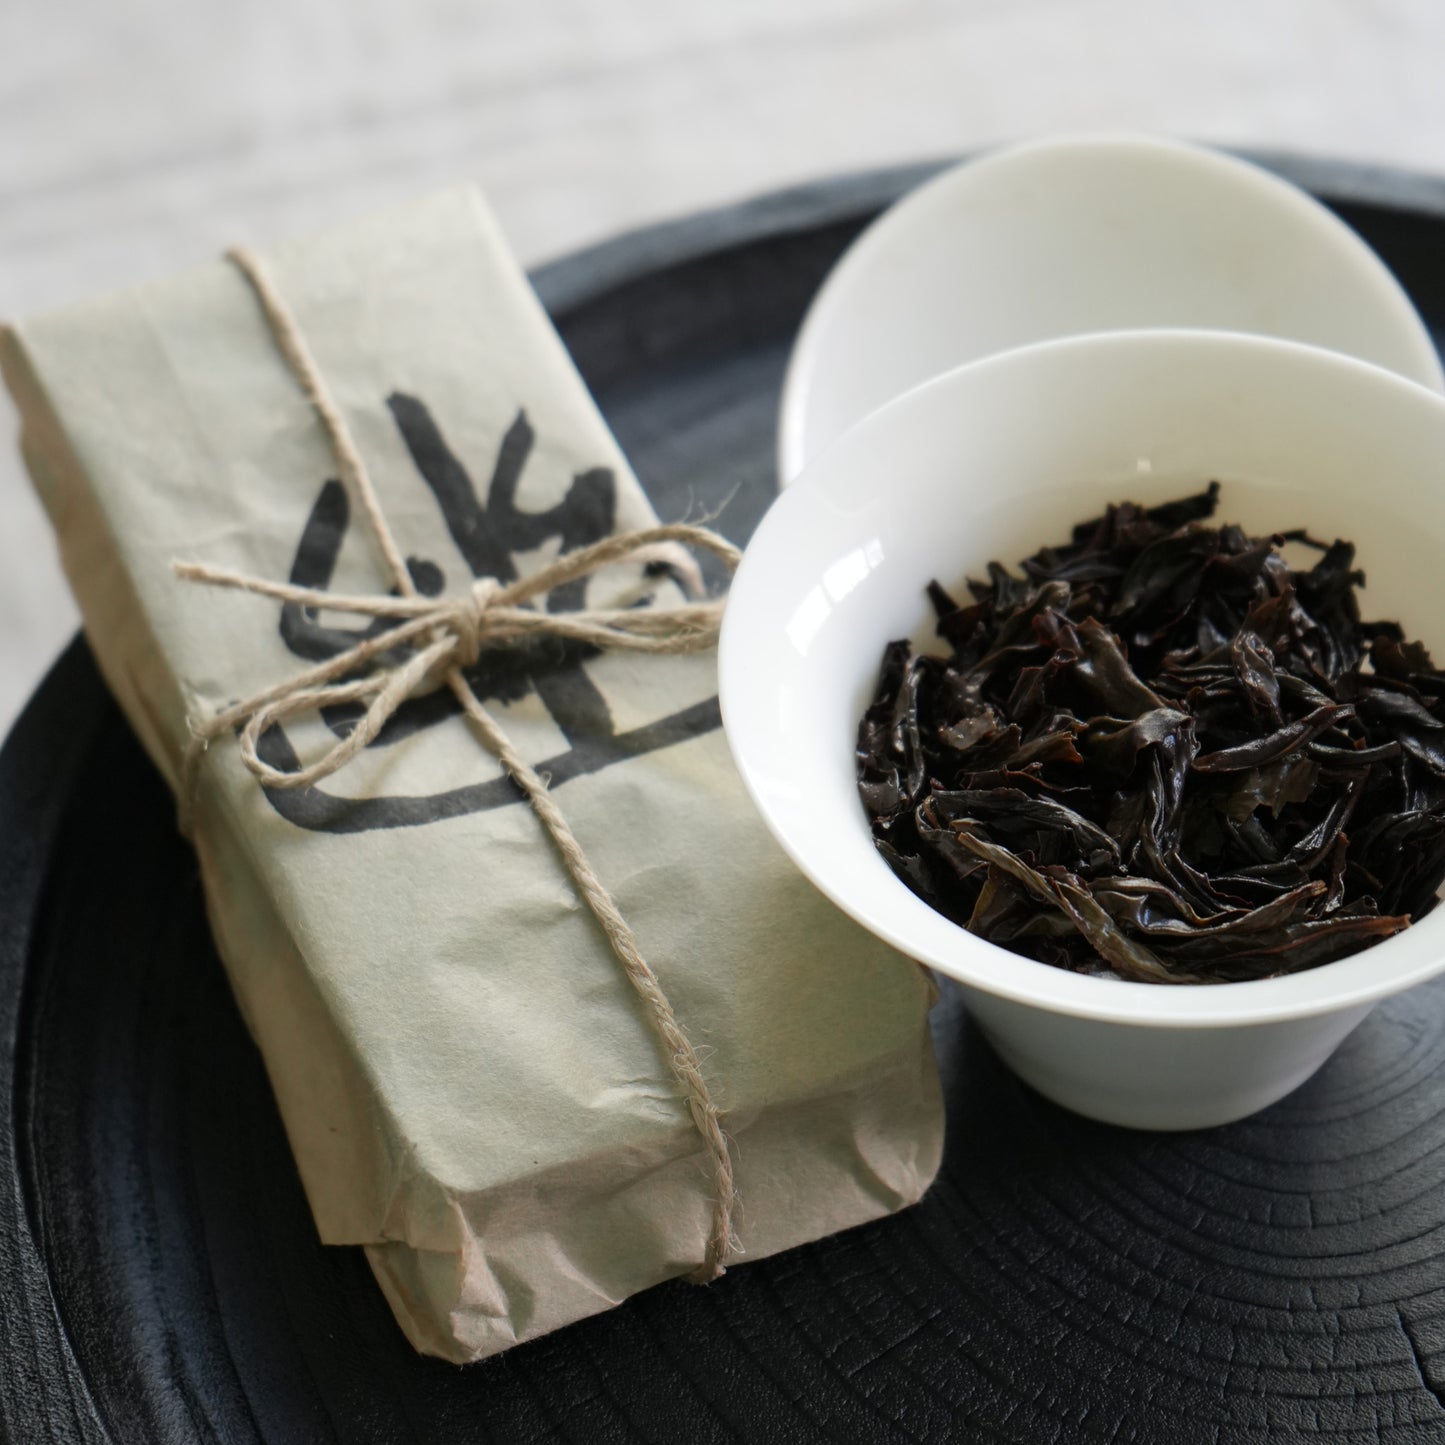 Packaging of Si Chá's Da Hong Pao Oolong tea